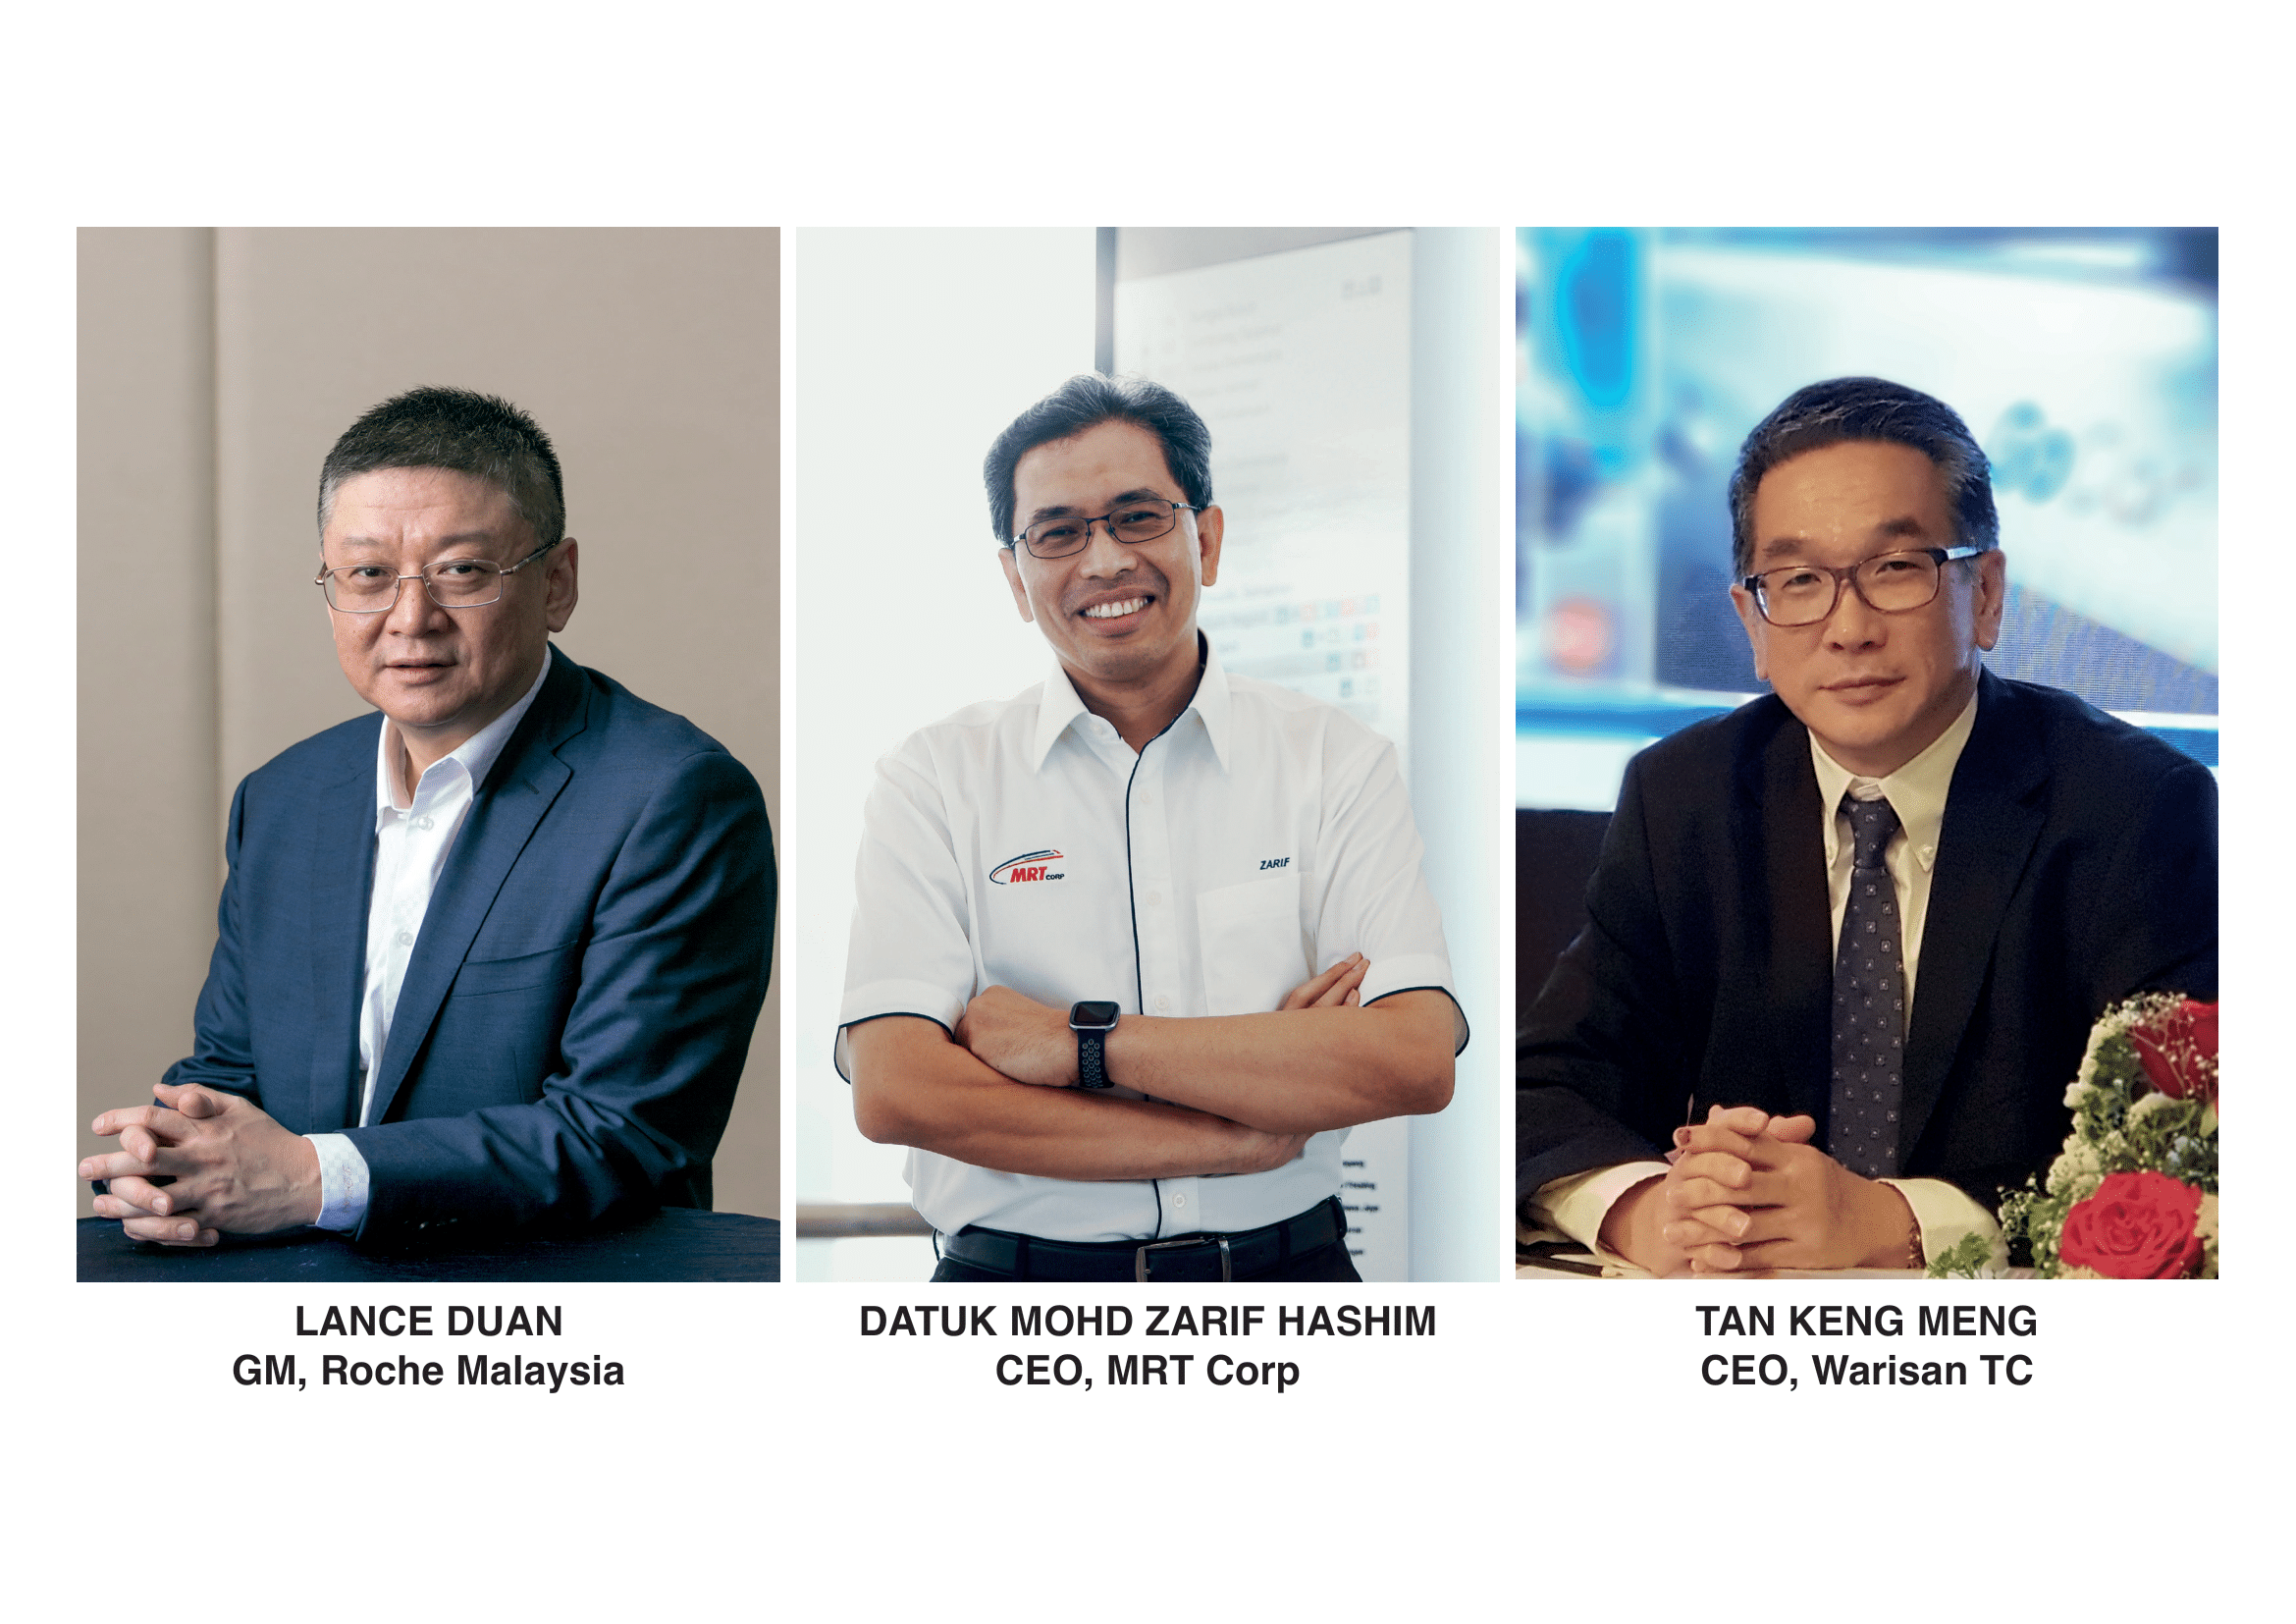 MRT CORP, ROCHE MALAYSIA AND WARISAN TC HEAD THE ASEAN HR AWARDS 2020 LIST